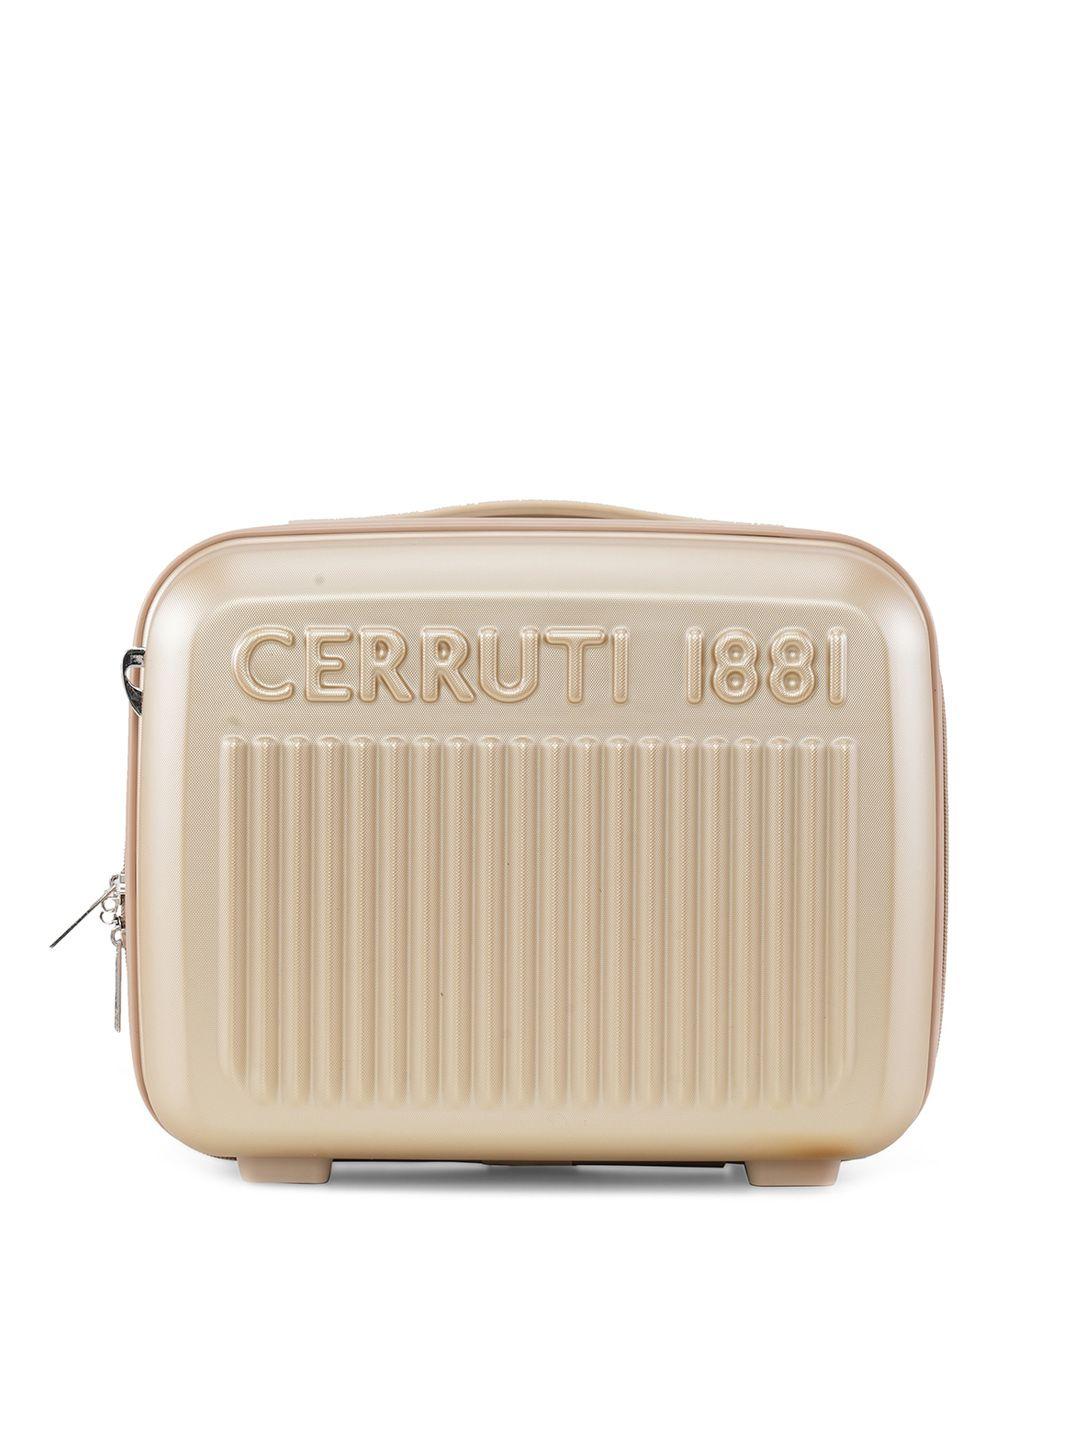 cerruti 1881 cer06088b hard sided textured vanity bag